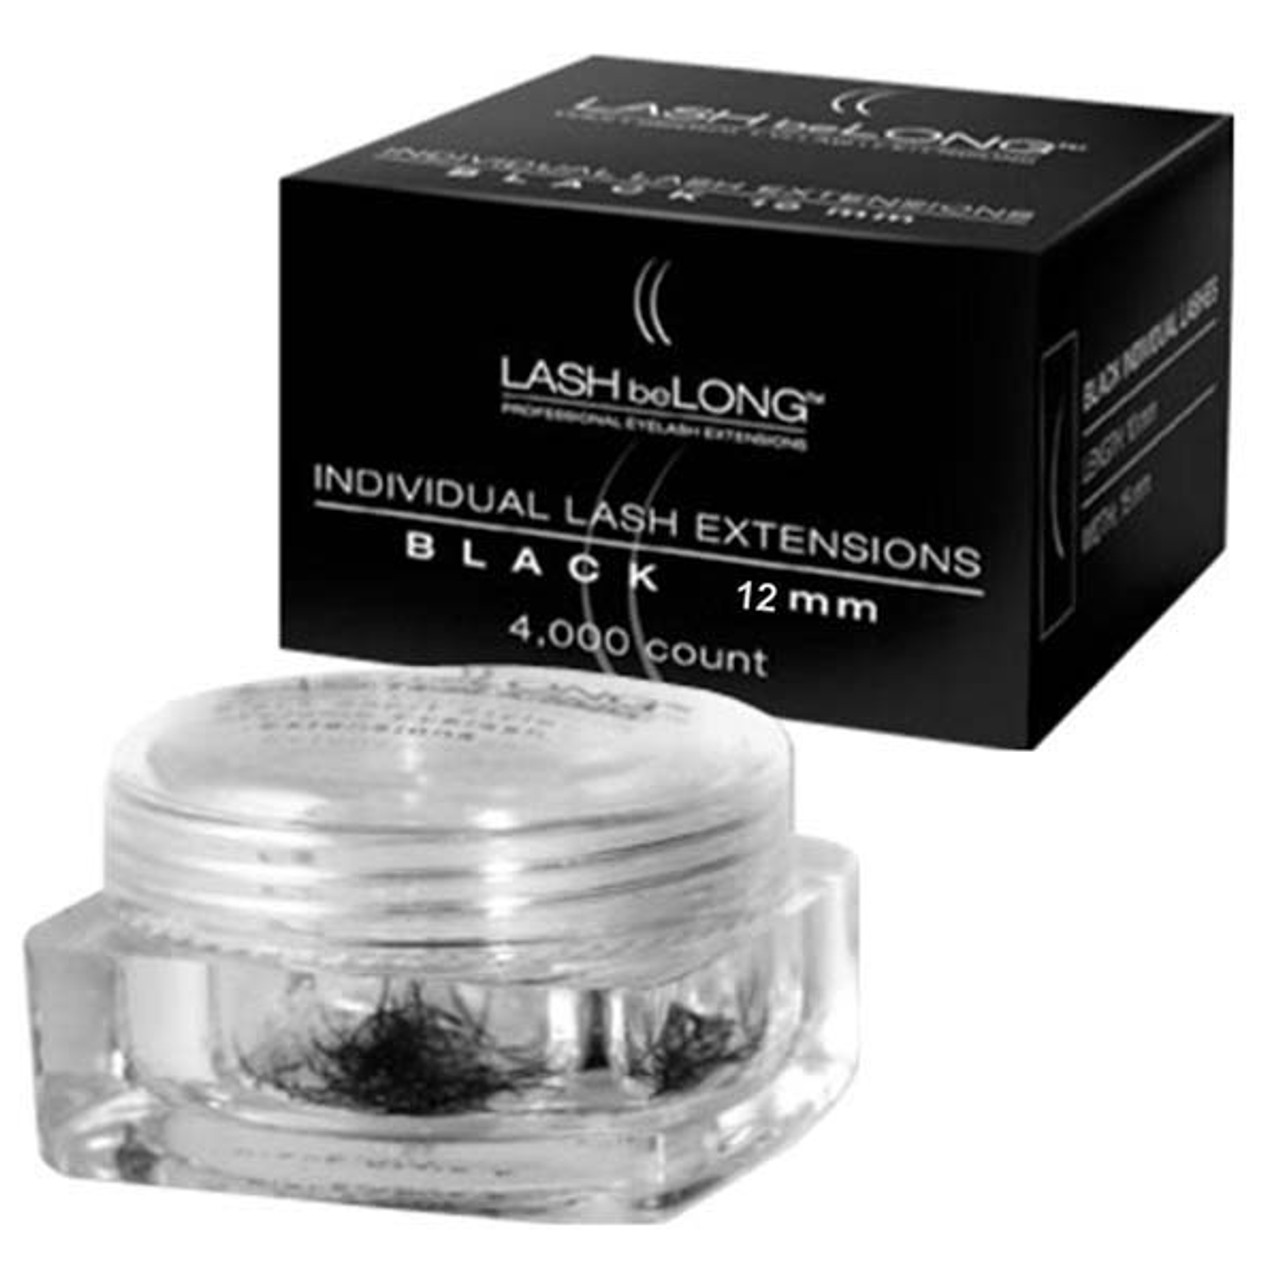 LASH beLONG Black 12mm Individual Lash Extensions  4,000 count